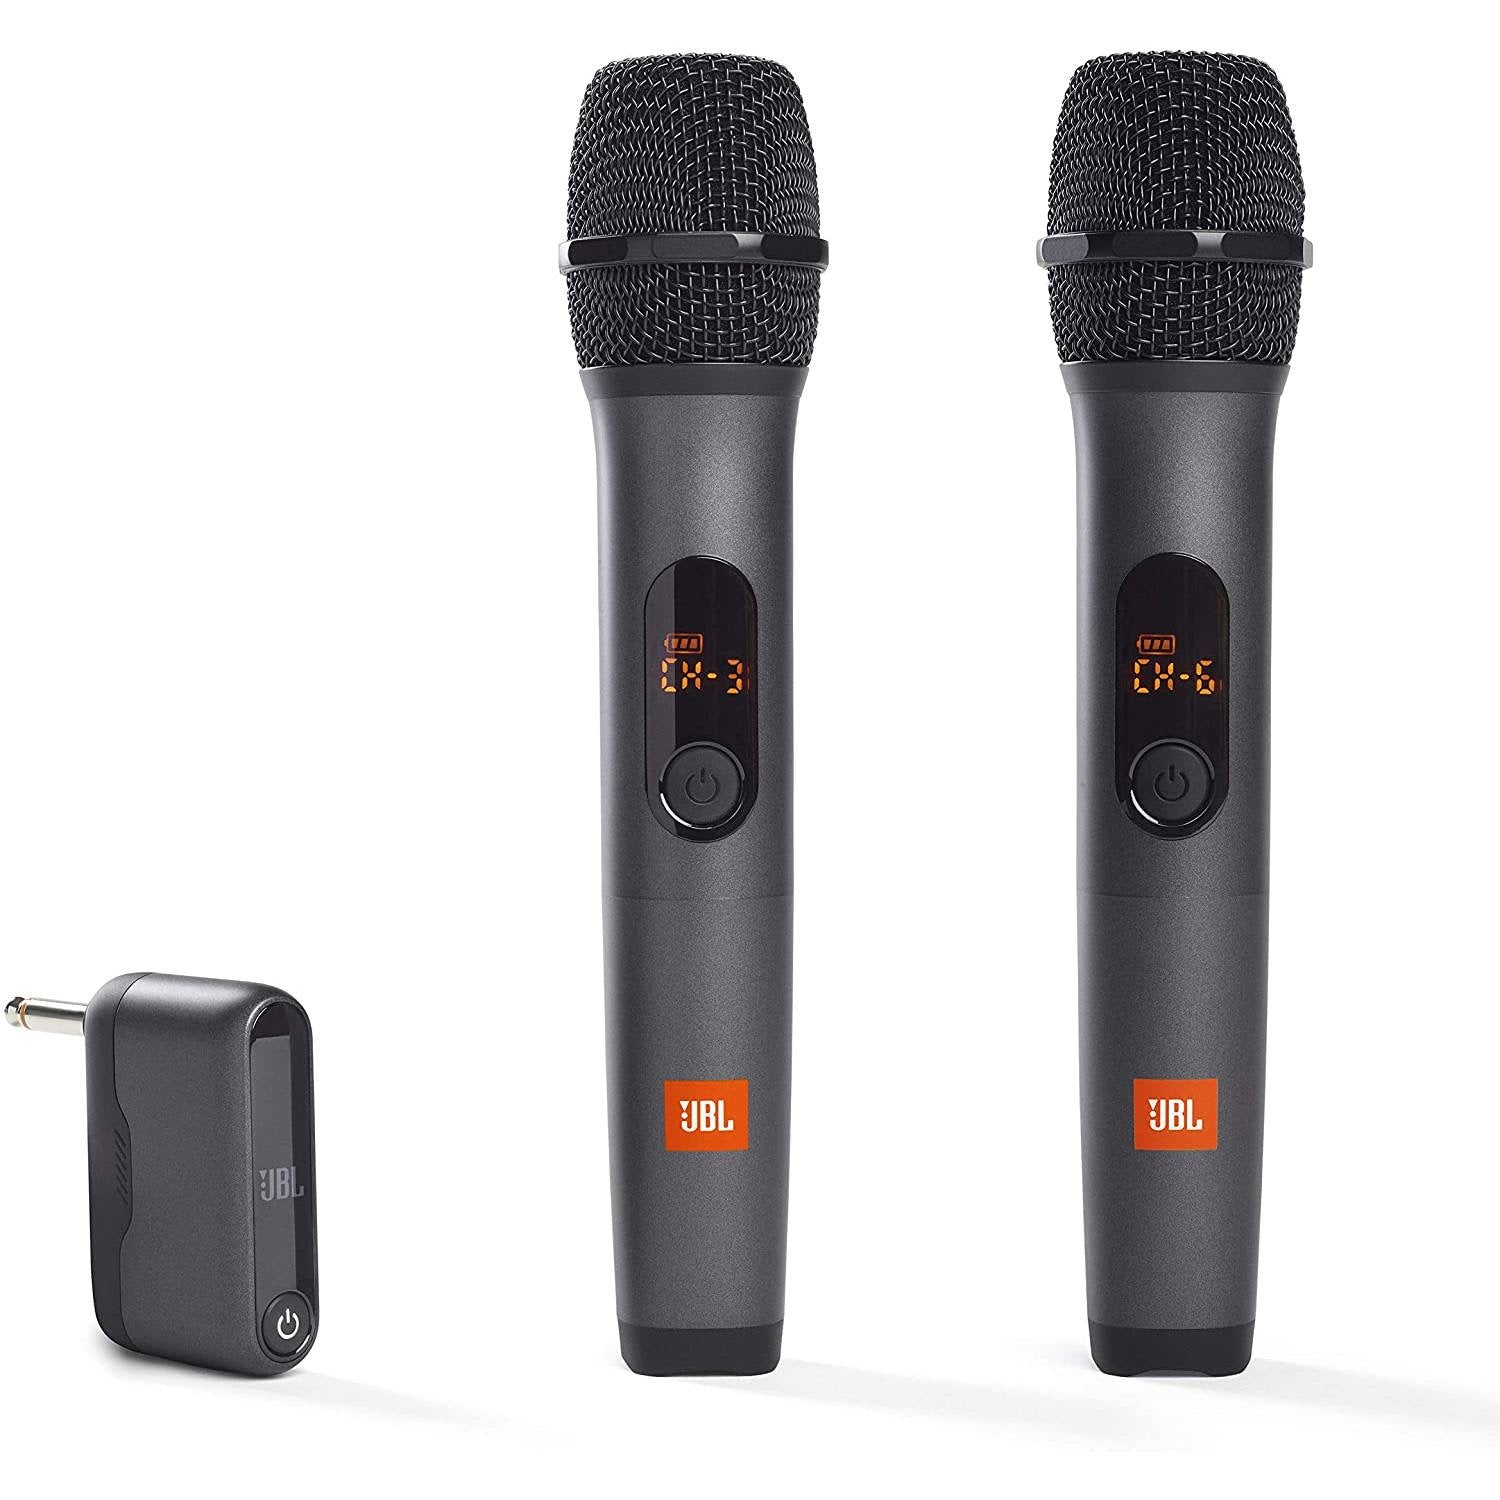 Jbl wireless microphone